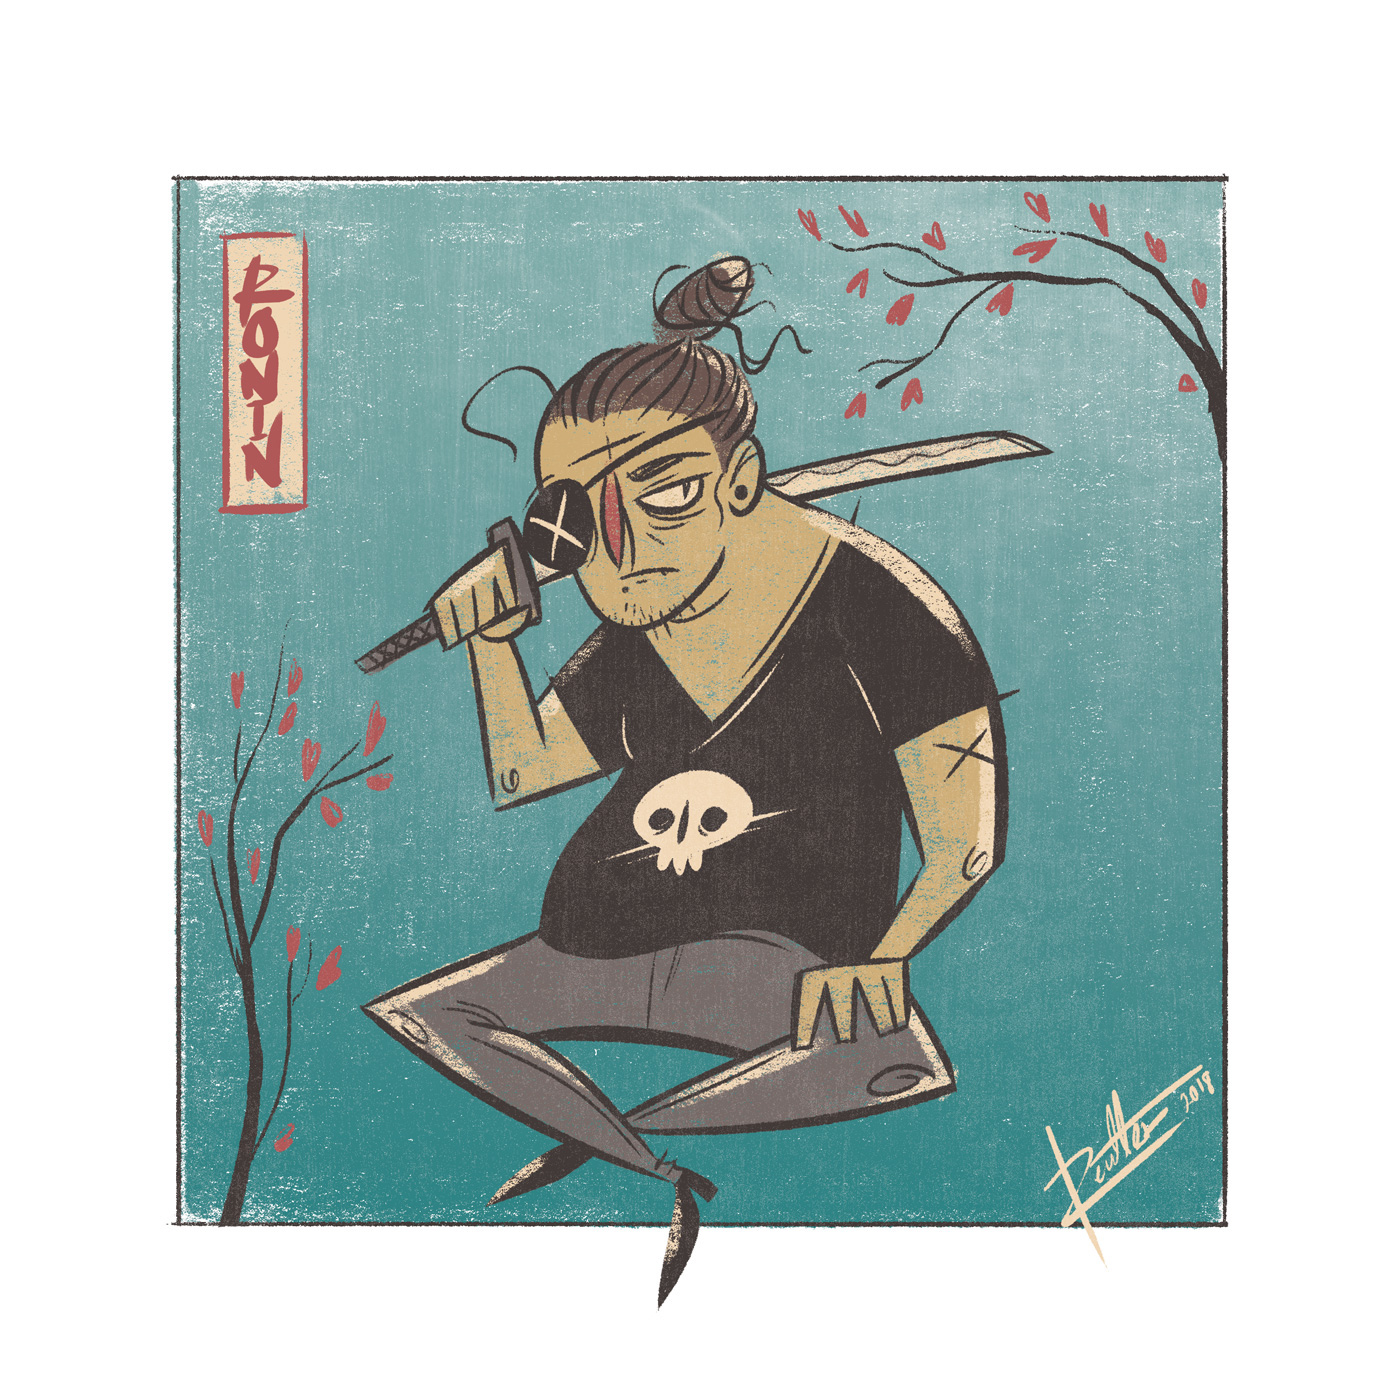 Freelance graphic design  ronin japan Work  ukiyo-e ILLUSTRATION  art Character samurai